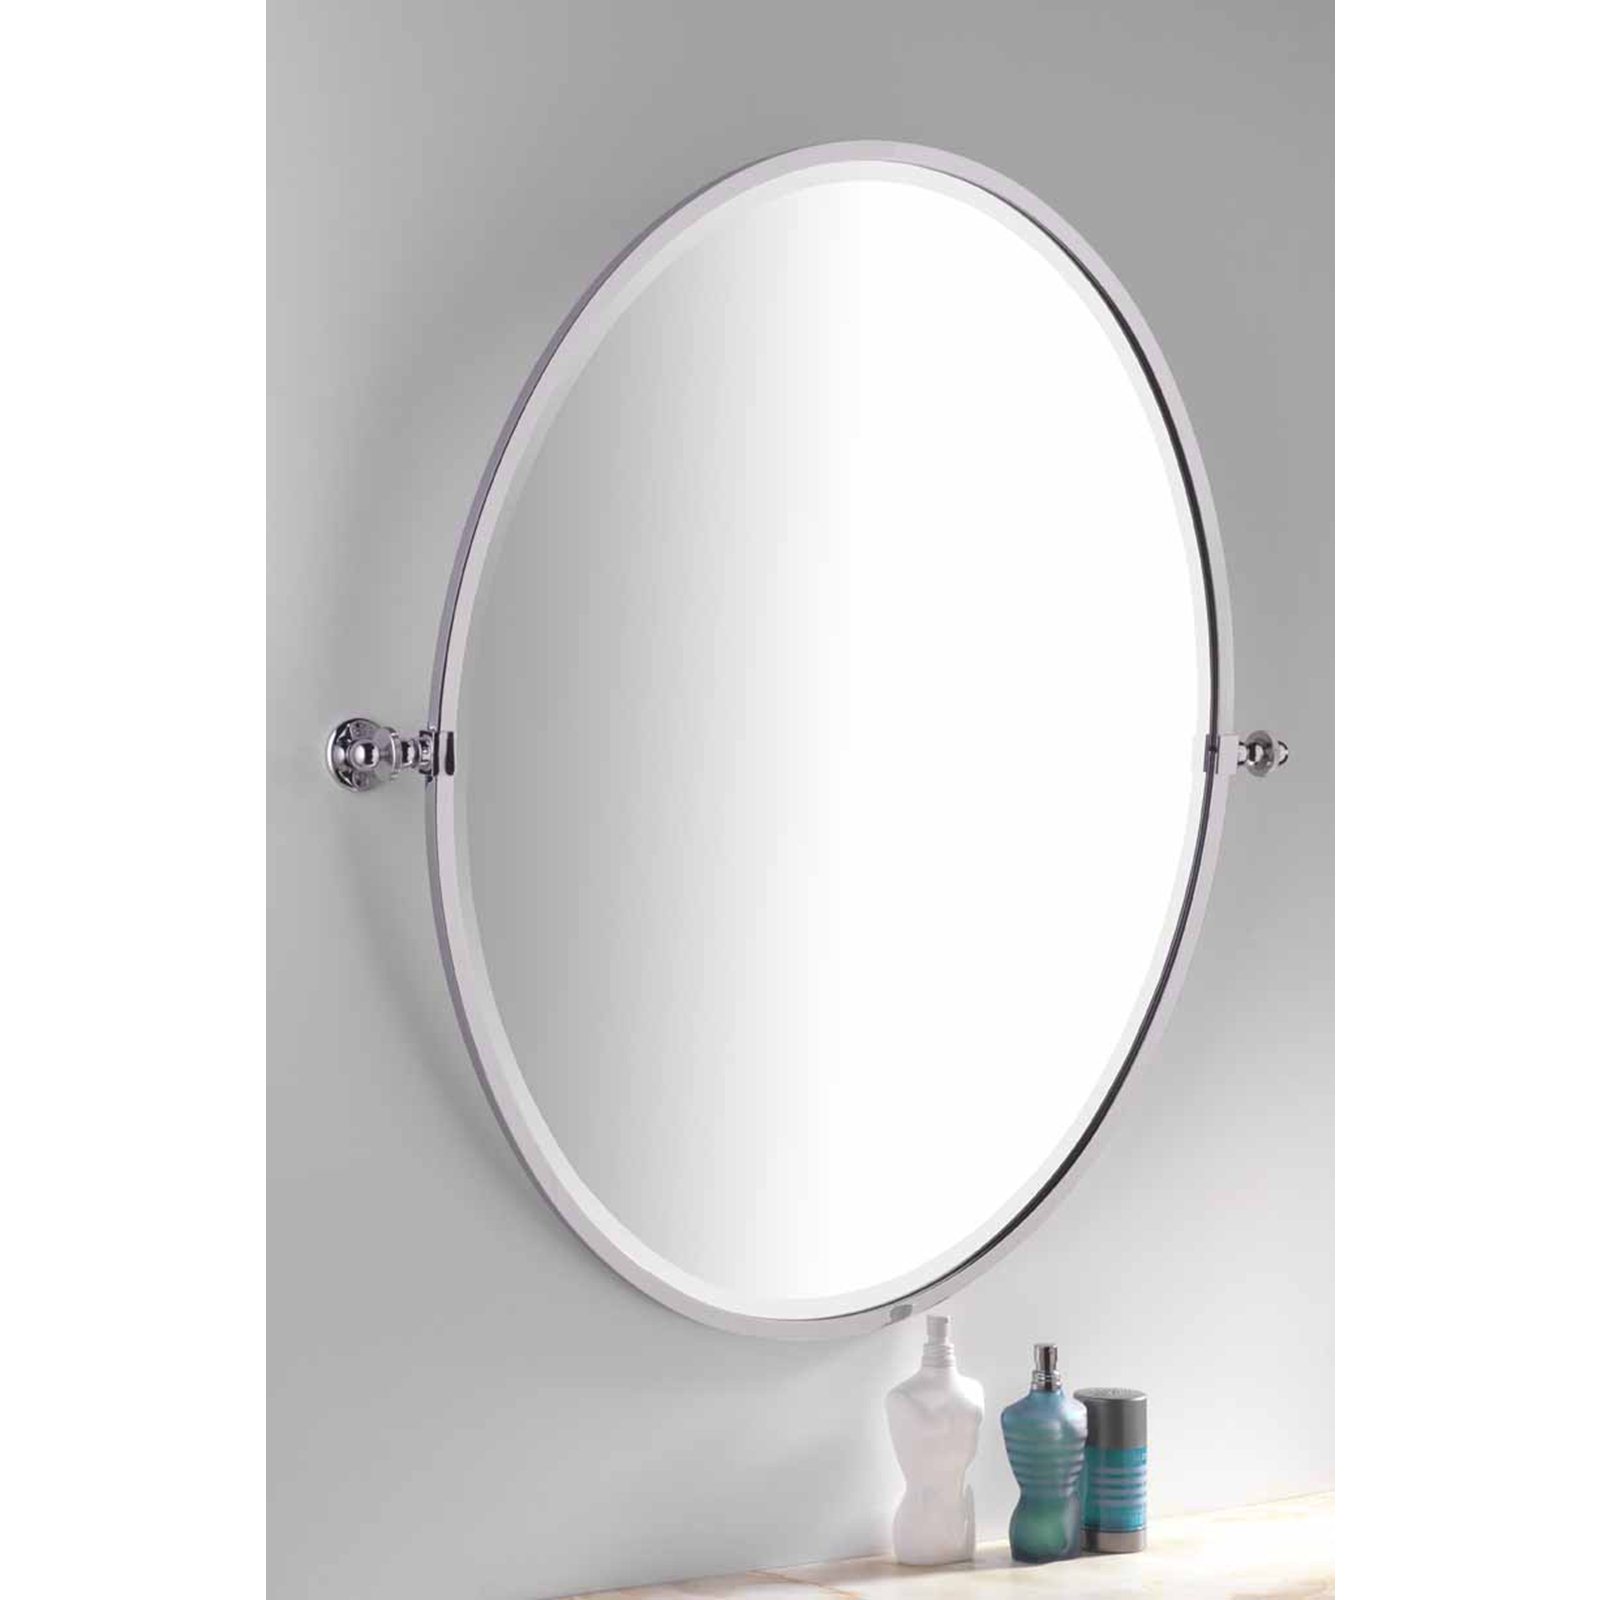 Handmade Bathroom Oval Framed Tilting, Tilting Bathroom Mirror Uk